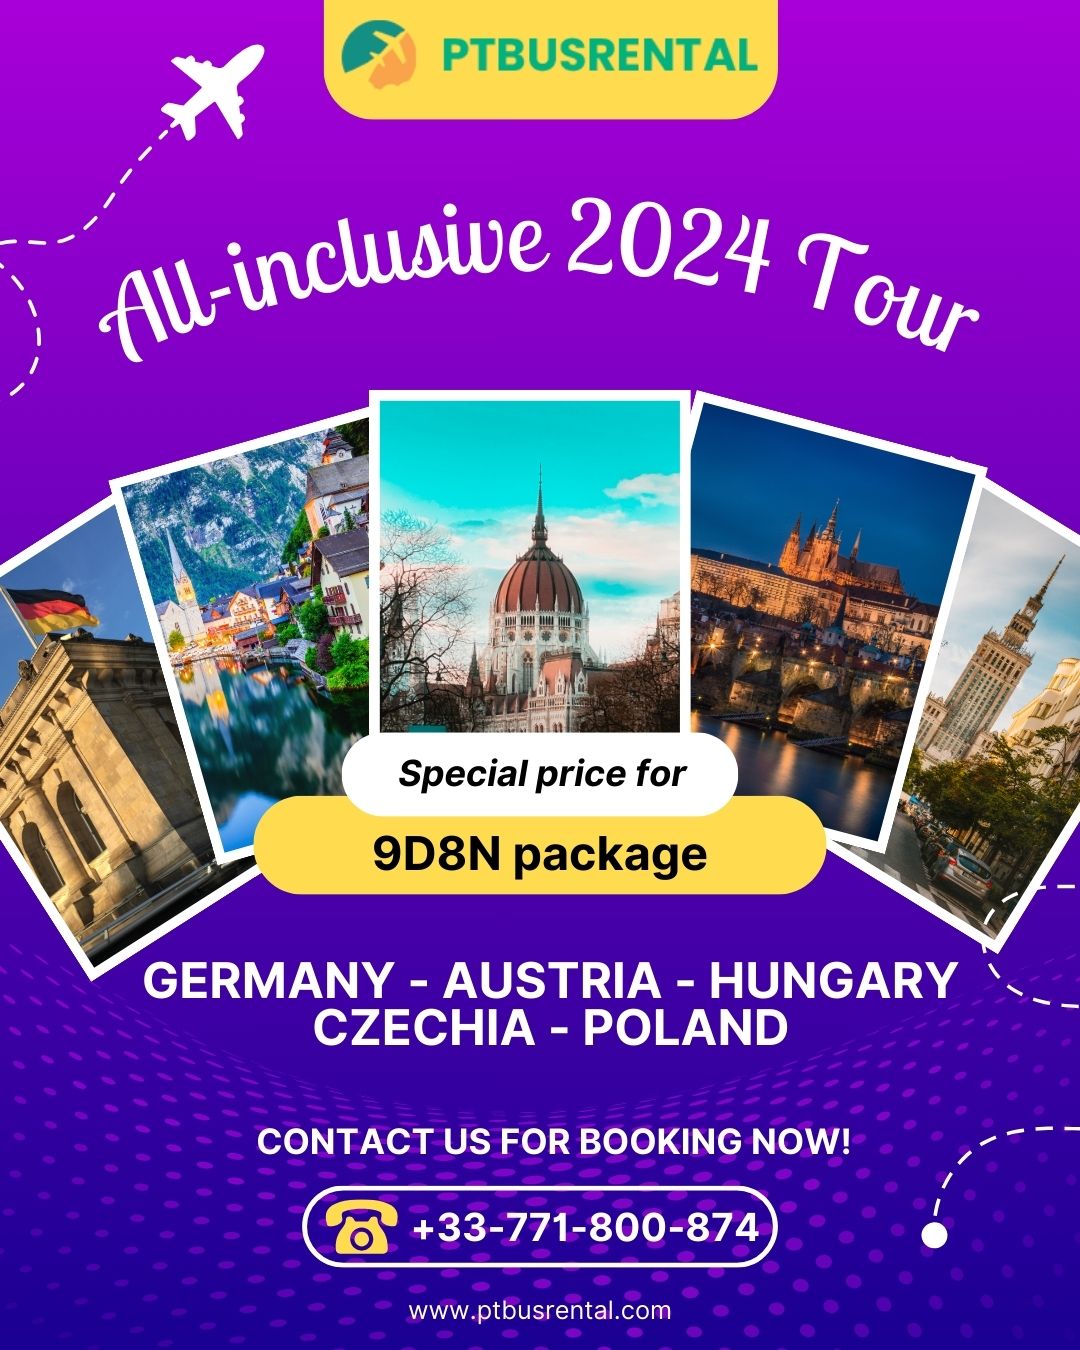 All-inclusive 2024 Tour Germany - Austria - Hungary - Czechia - Poland